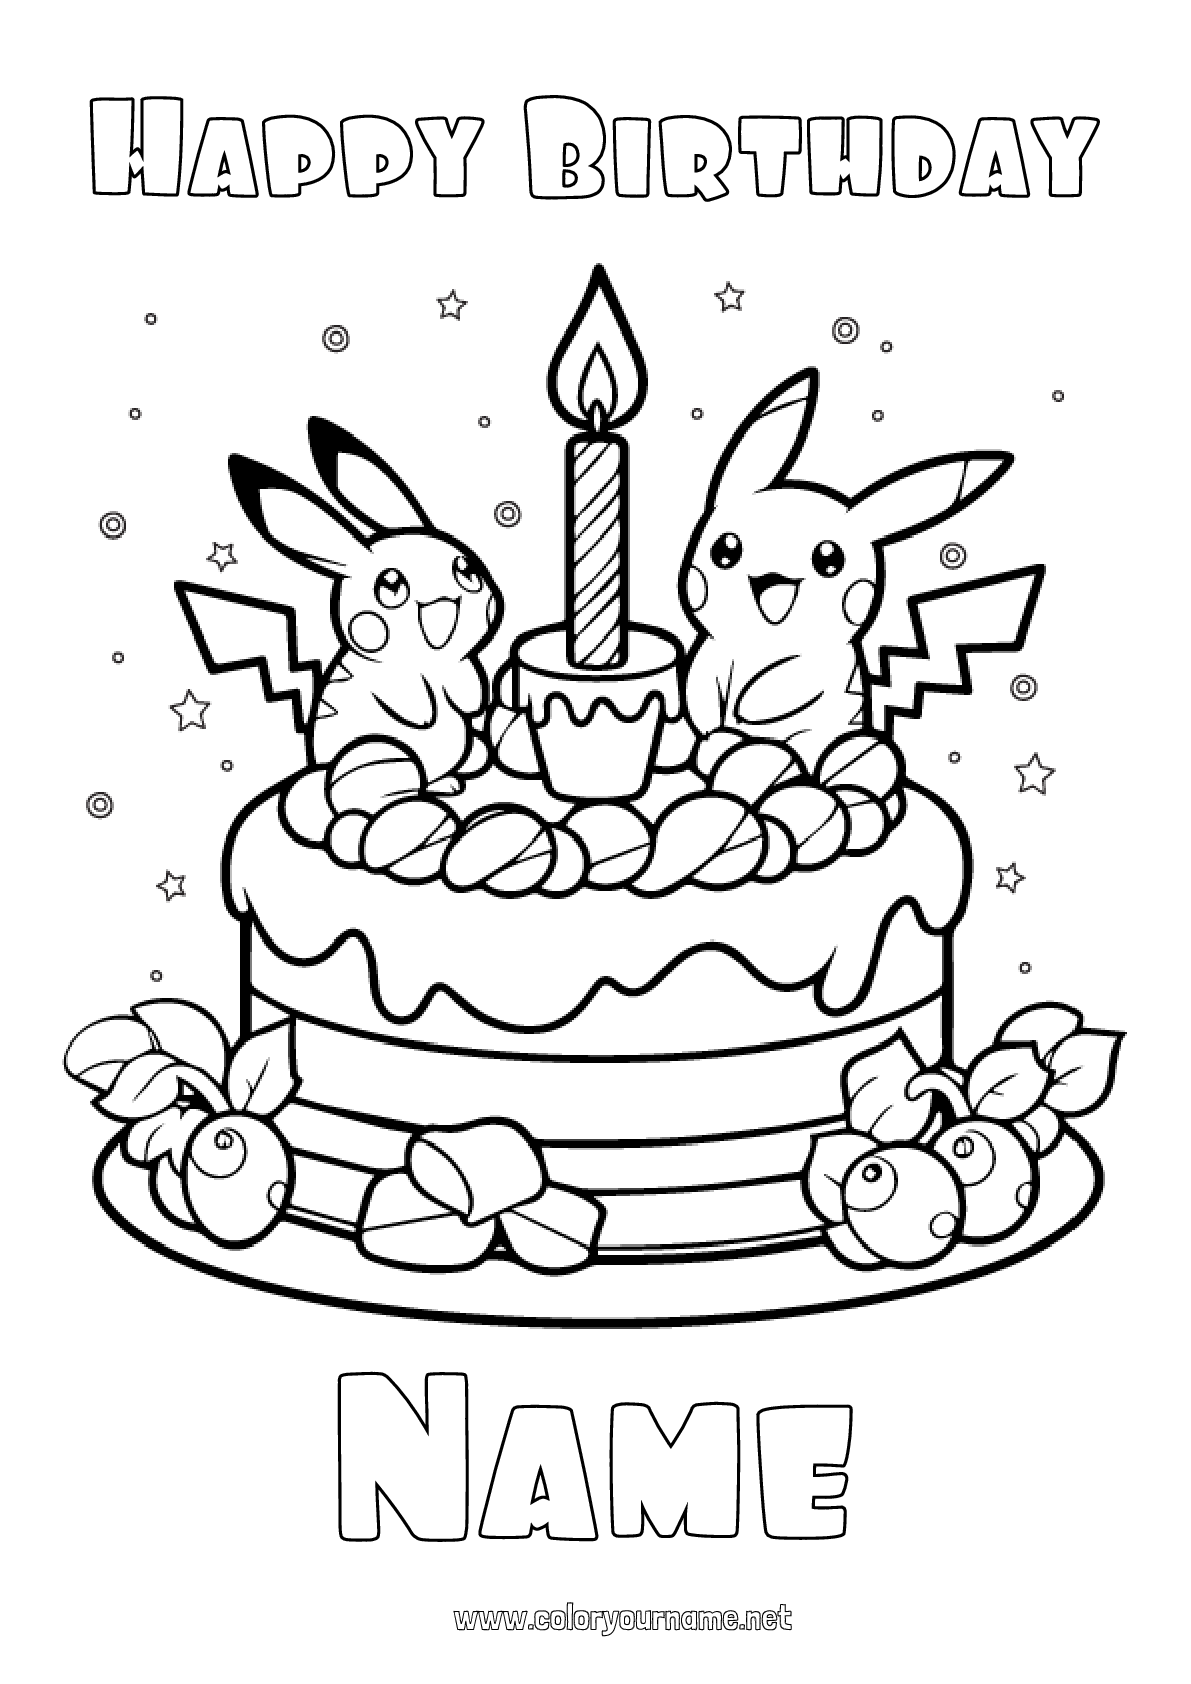 Coloring page No.3573 - Cake Birthday Pokemon